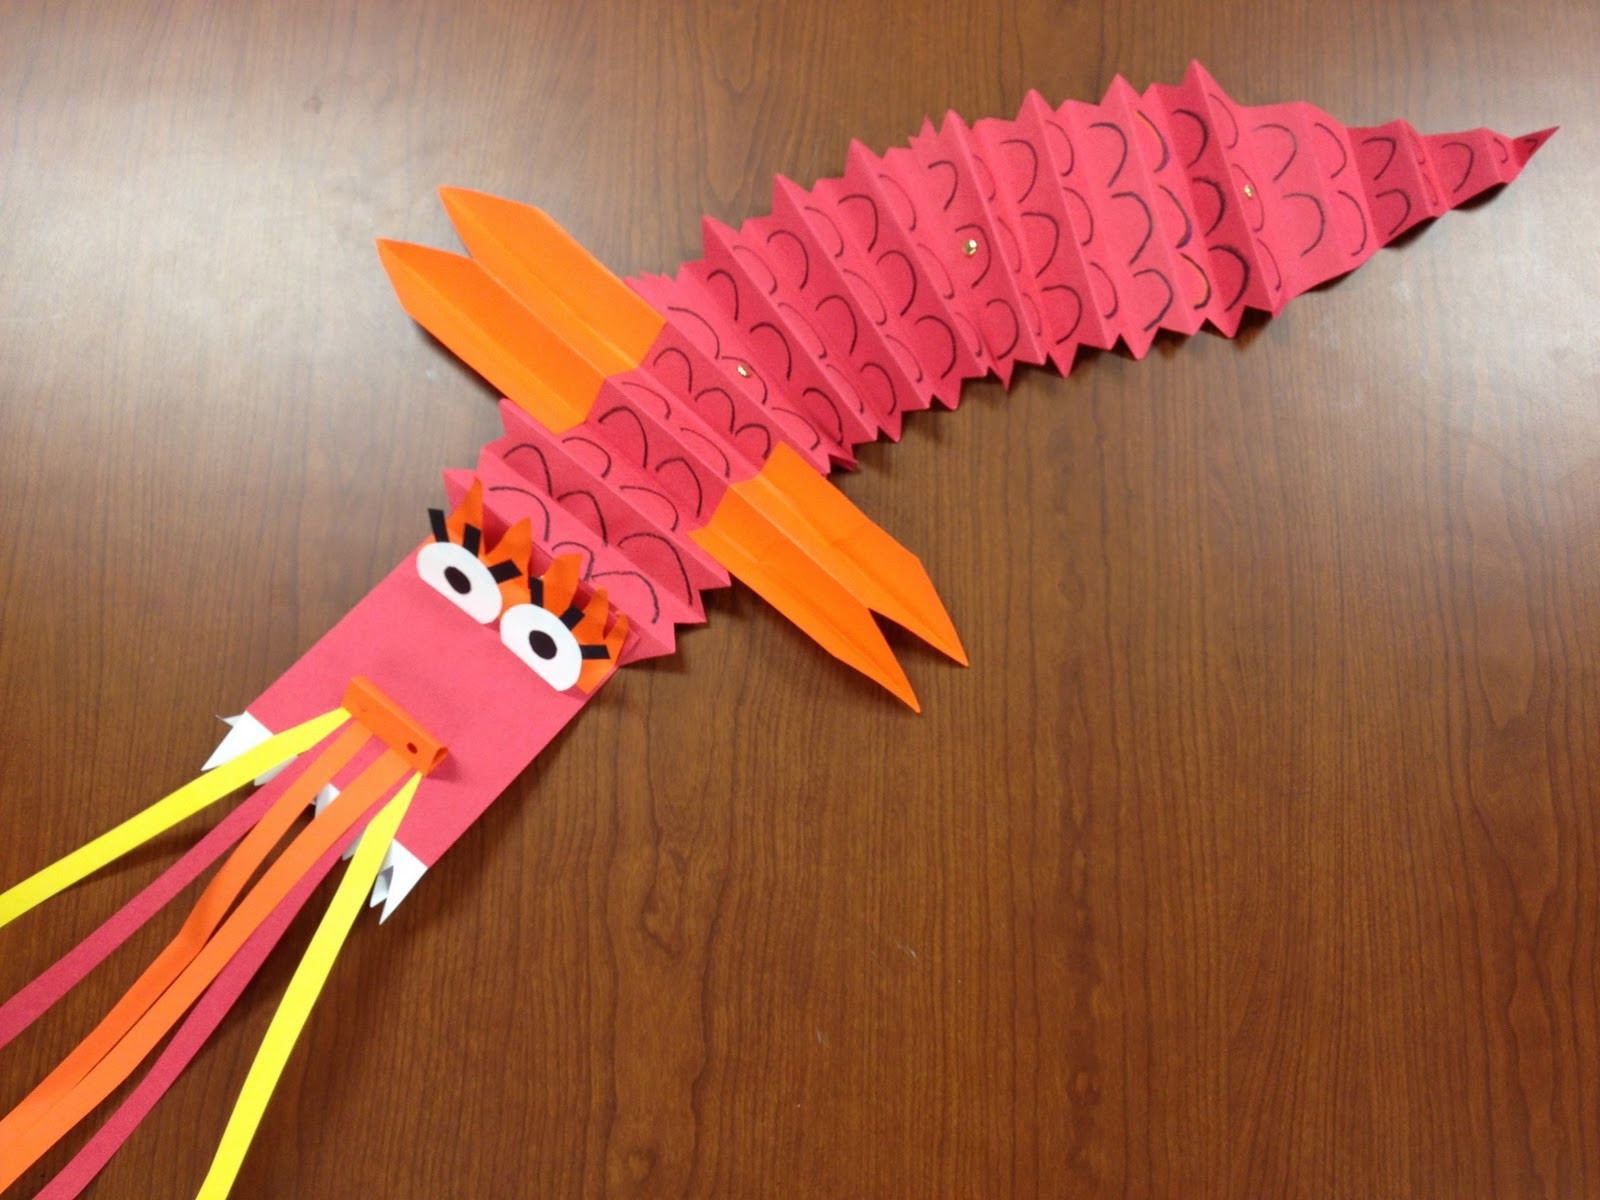 Dragon Craft For Kids
 Gung Hey Fat Choy Chinese New Year Dragons • TeachKidsArt